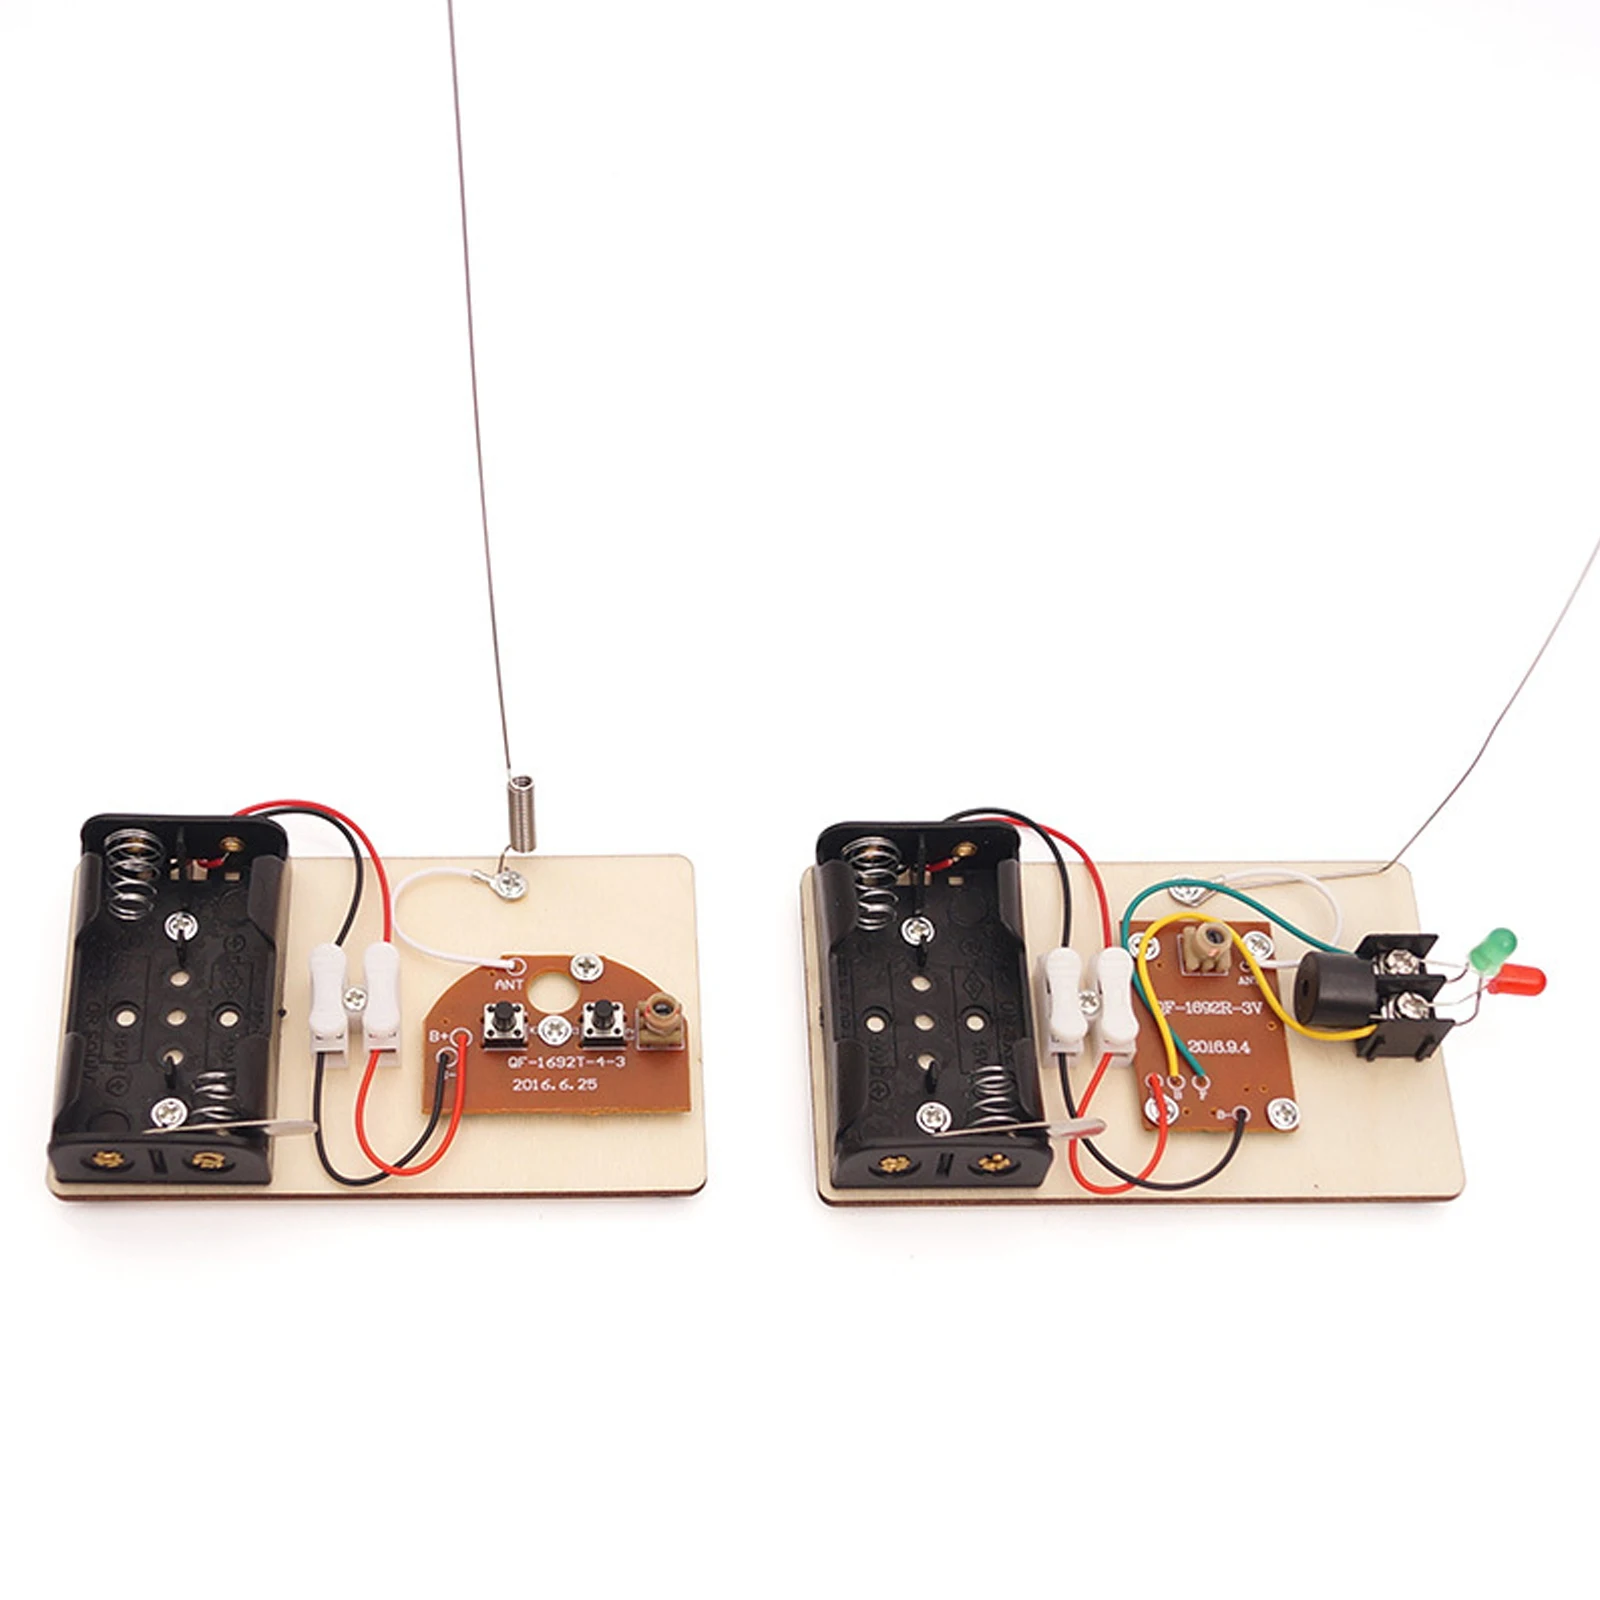 KizaBot’s Wireless Telegraph DIY Kit Build Your Own Transmitter and Receiver